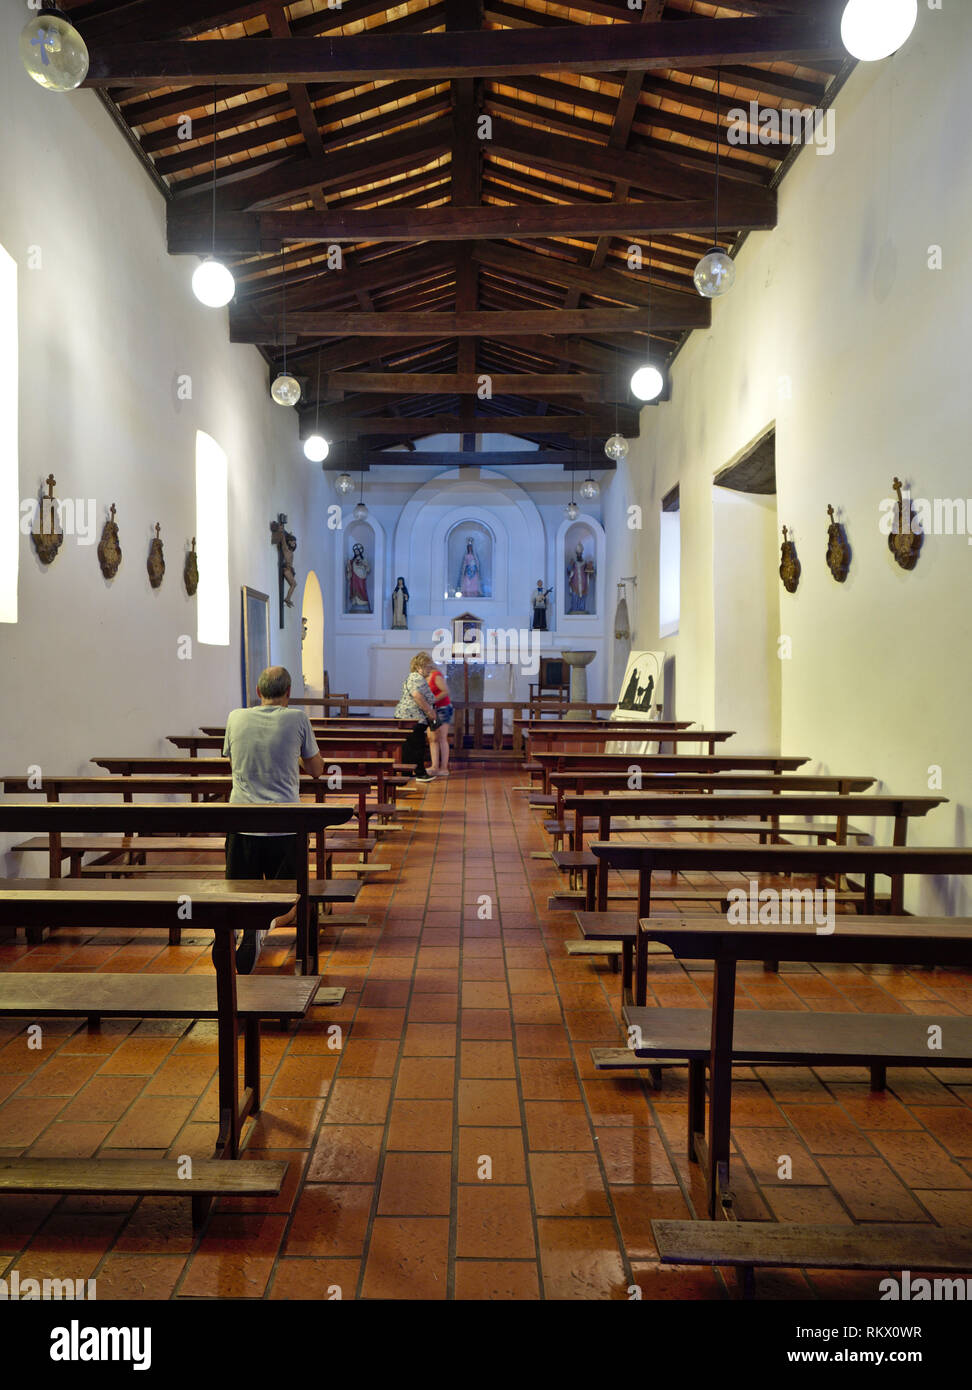 Merlo, San Luis, Argentina - 2019: Interior view of Parroquia Nuestra Señora del Rosario church, located at the city center. Stock Photo